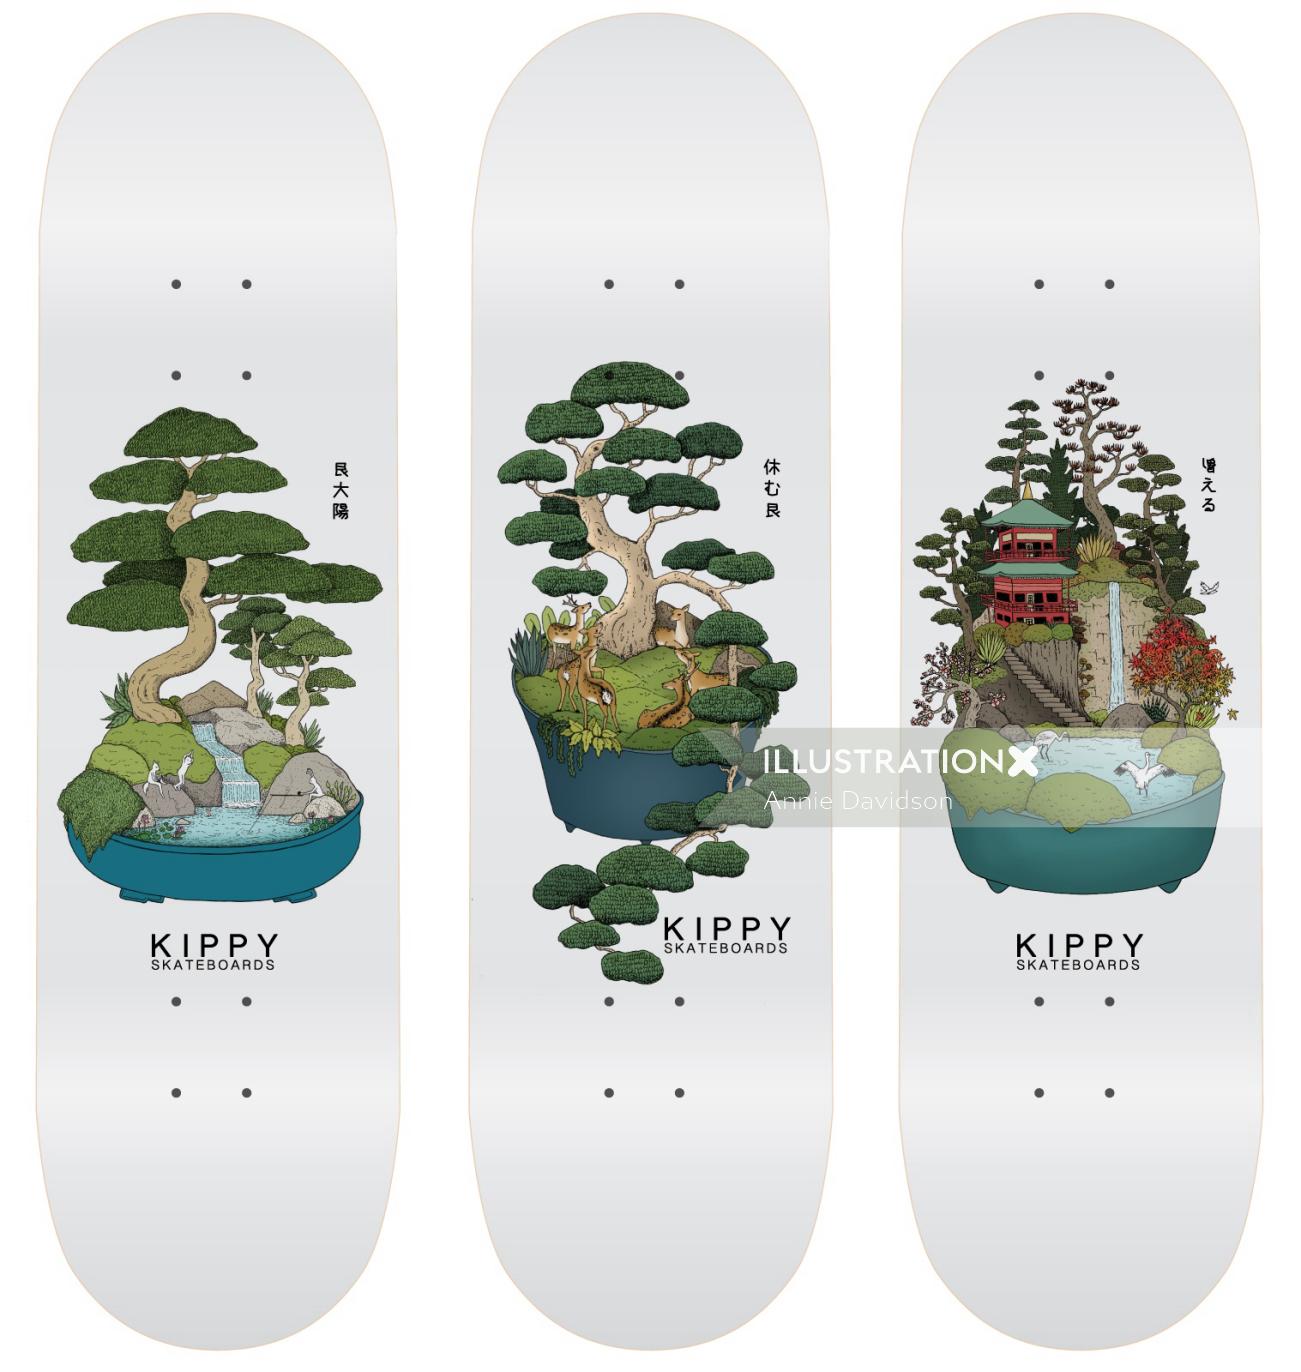 Kippy skateboards graphic design